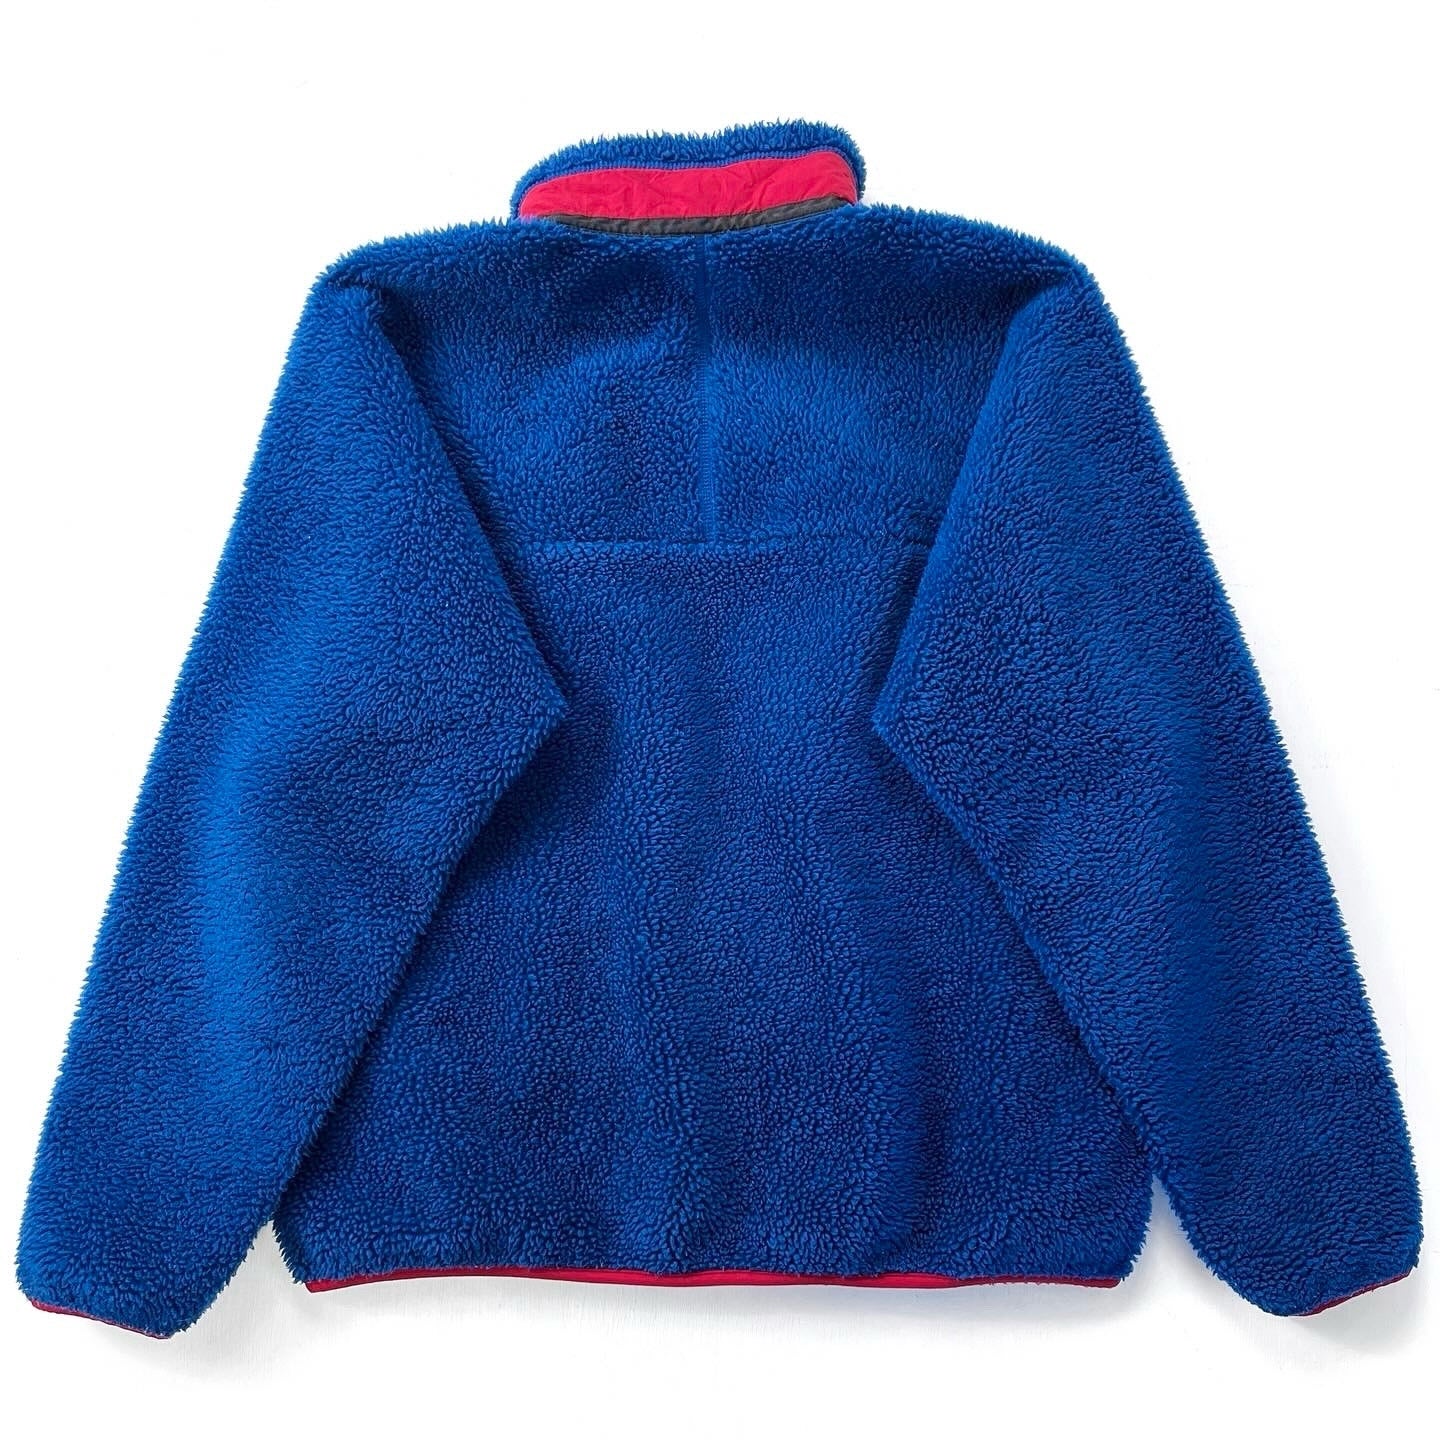 2010 Patagonia Classic Retro-X Fleece Jacket, Channel Blue (L)